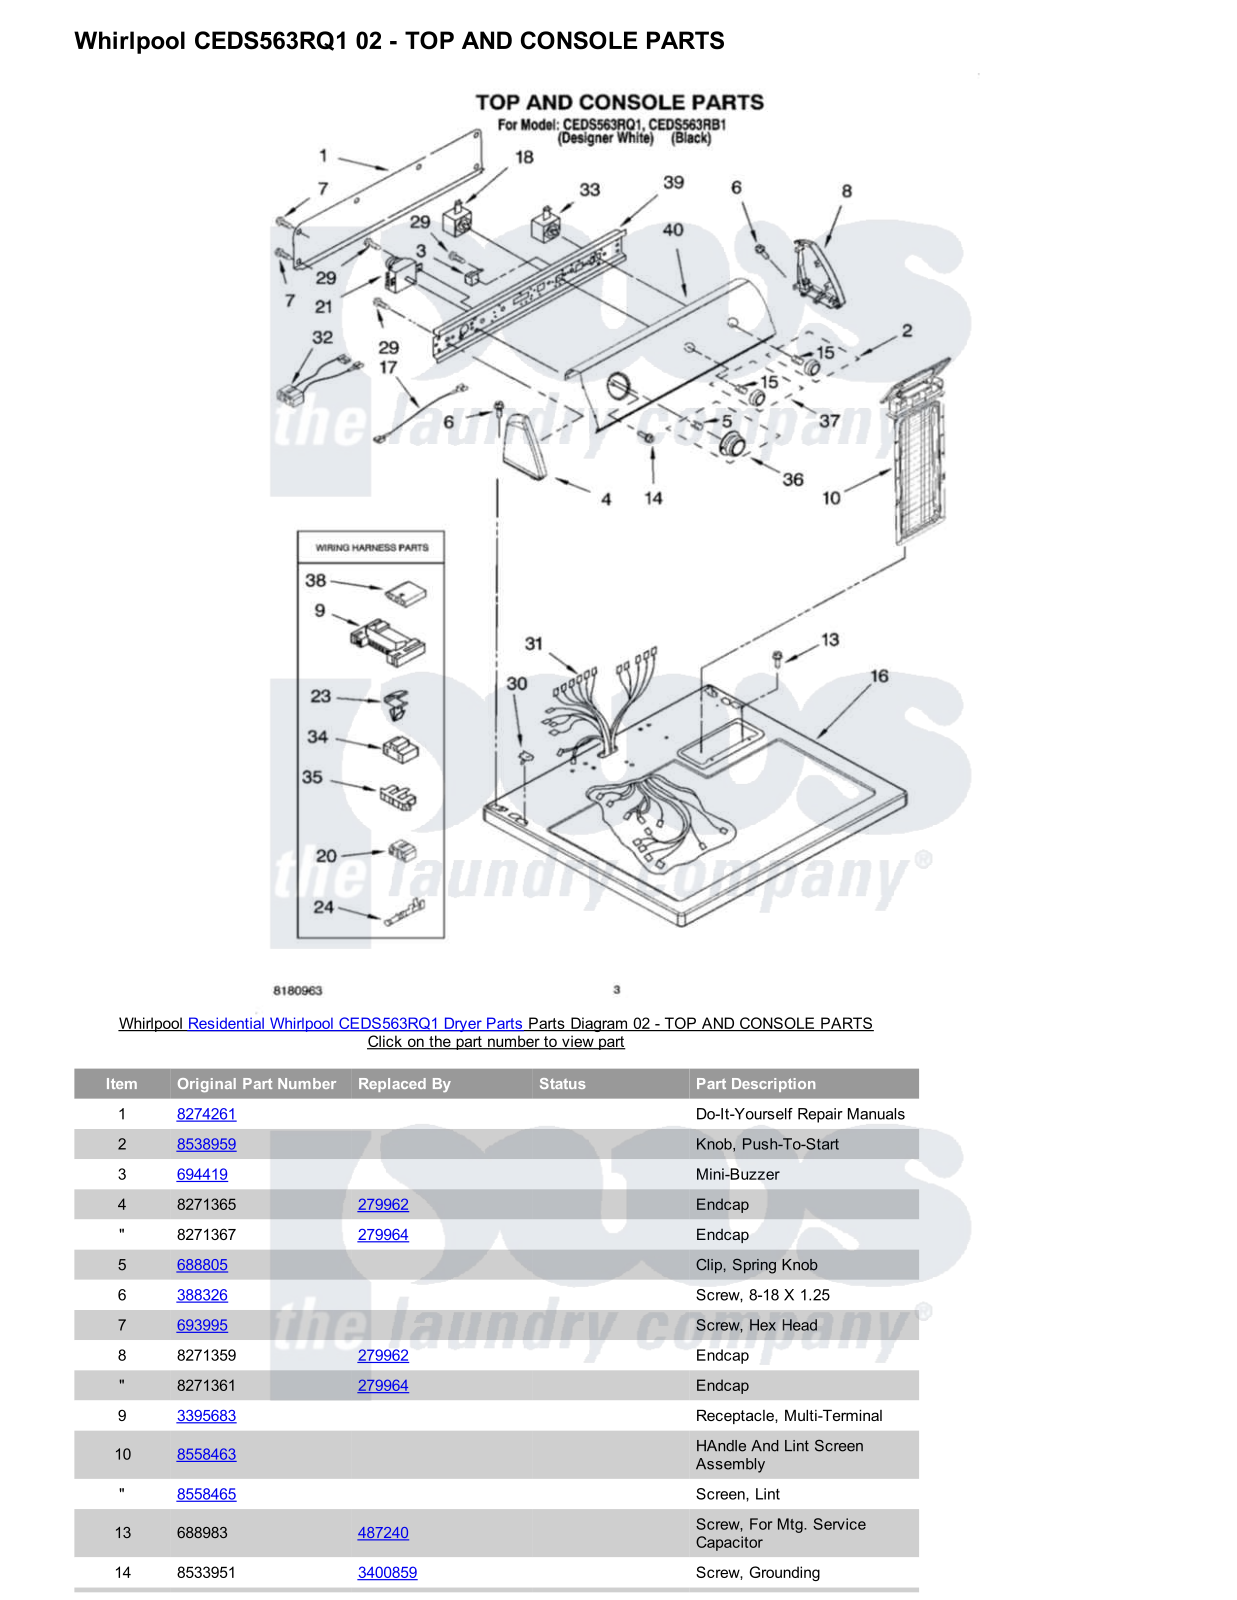 Whirlpool CEDS563RQ1 Parts Diagram